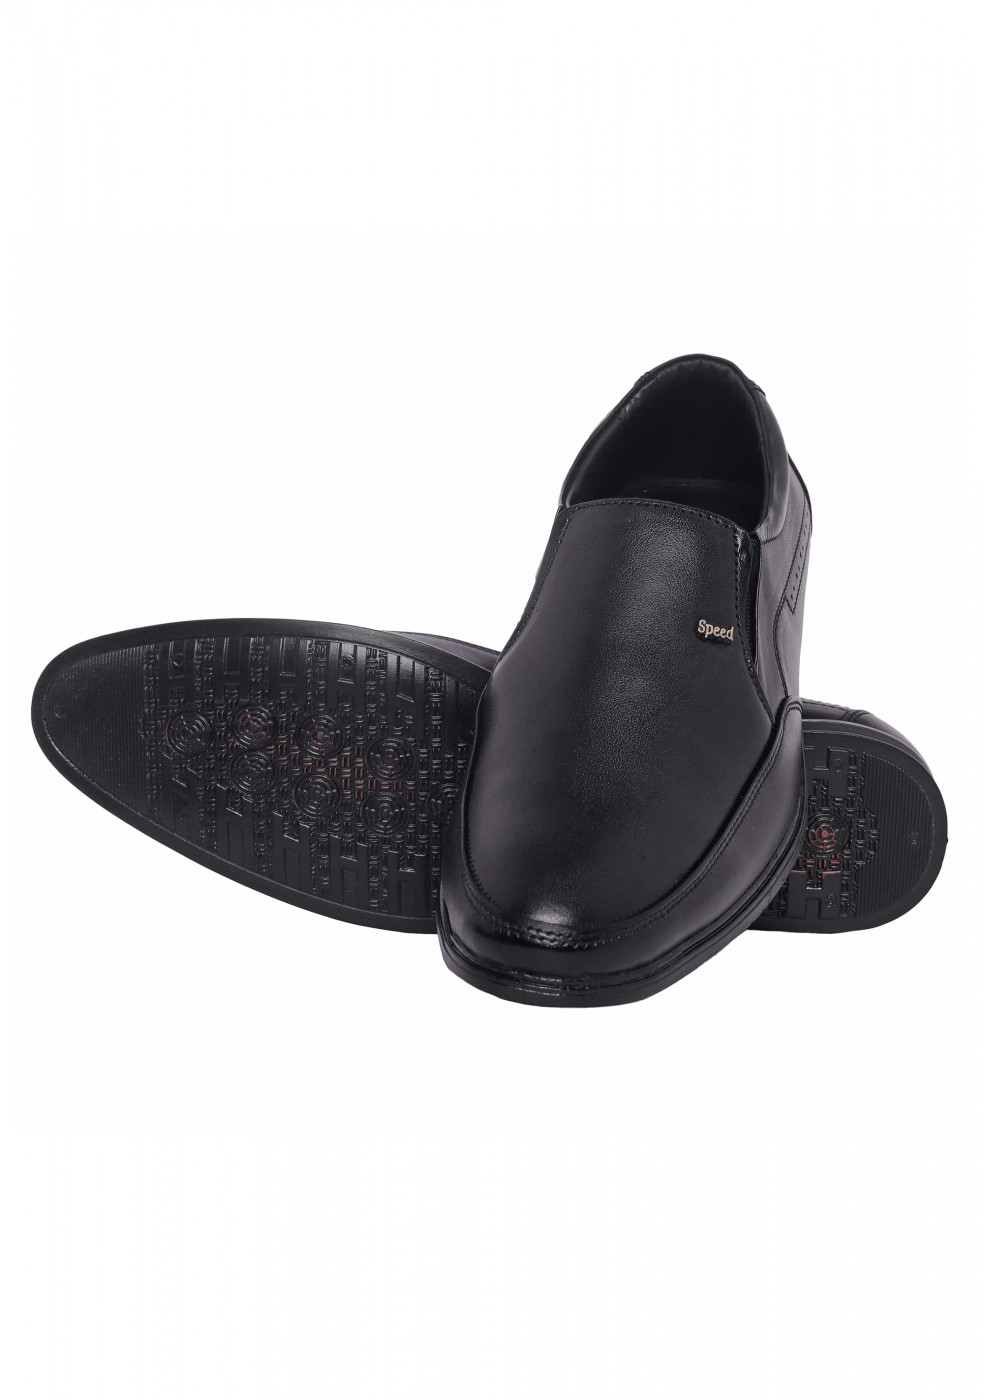 XSTOM Leather Formal Stylish Black Color Shoes For Men